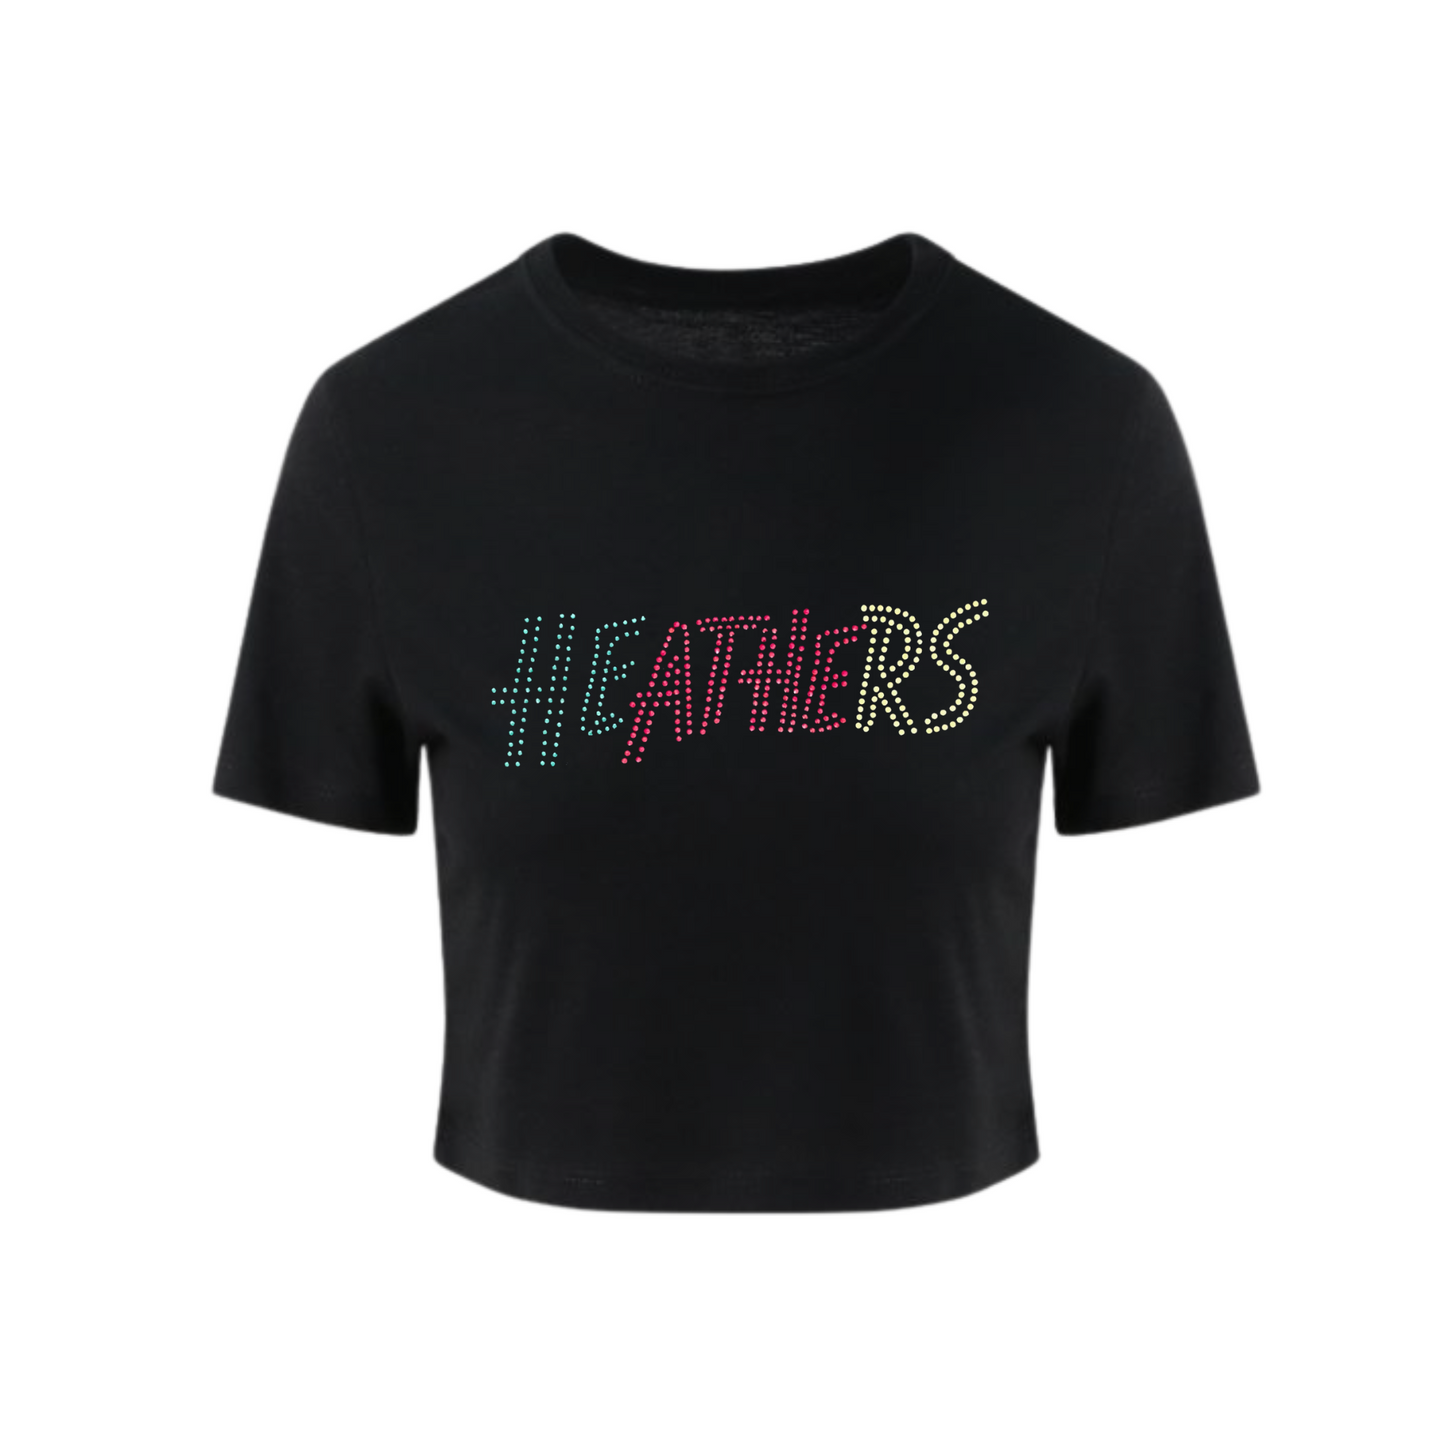 Heathers Musical Theatre crop T Shirt,